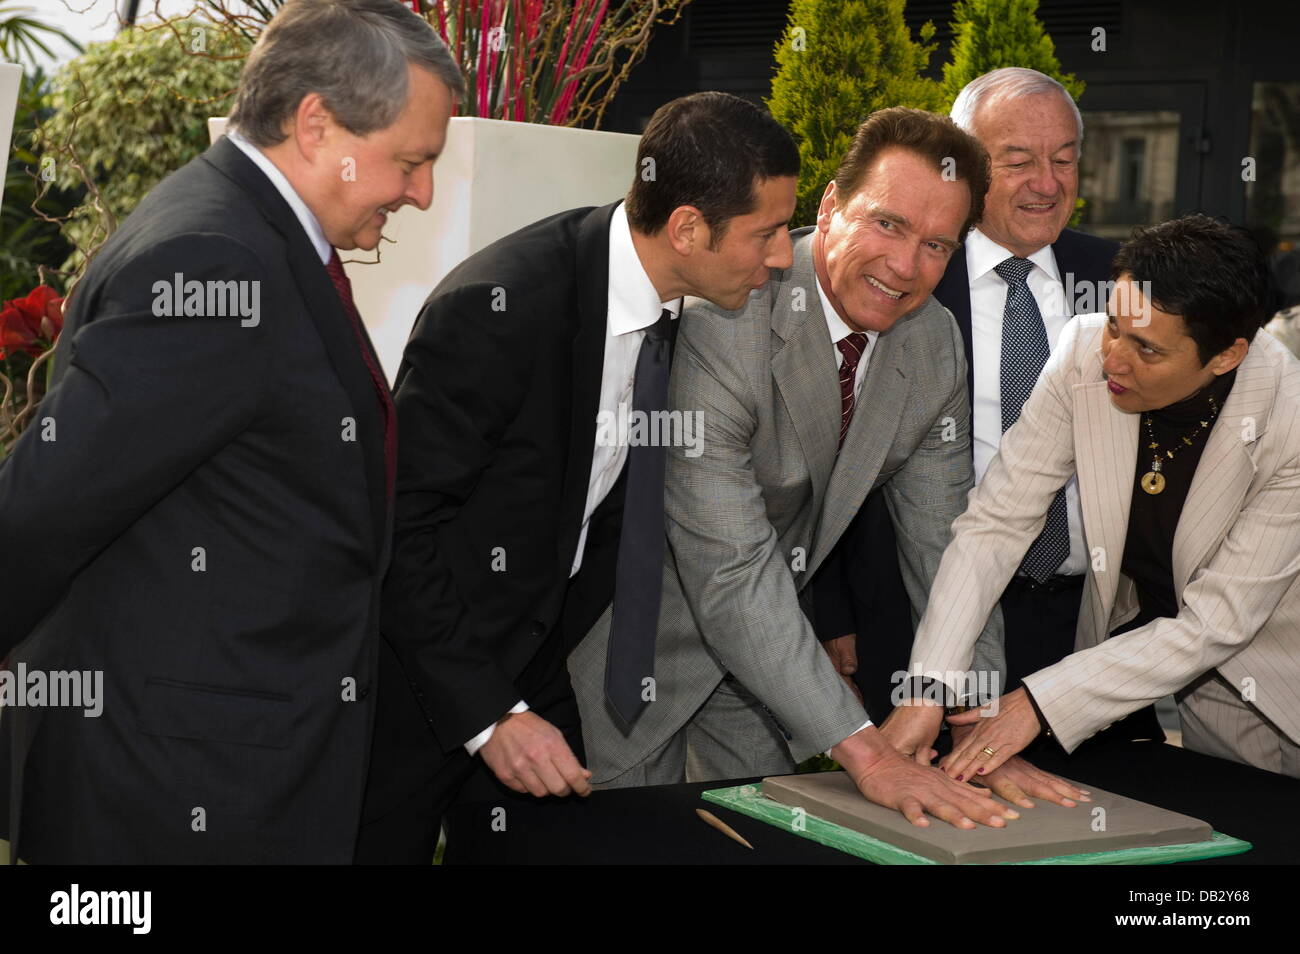 Paul Zilk, Ceo of Reed Midem, Arnold Schwarzenegger and Cannes Mayor Bernard Brochand  attend a 'Handprint Ceremony' during MIPTV Cannes, France - 04.04.11 Stock Photo